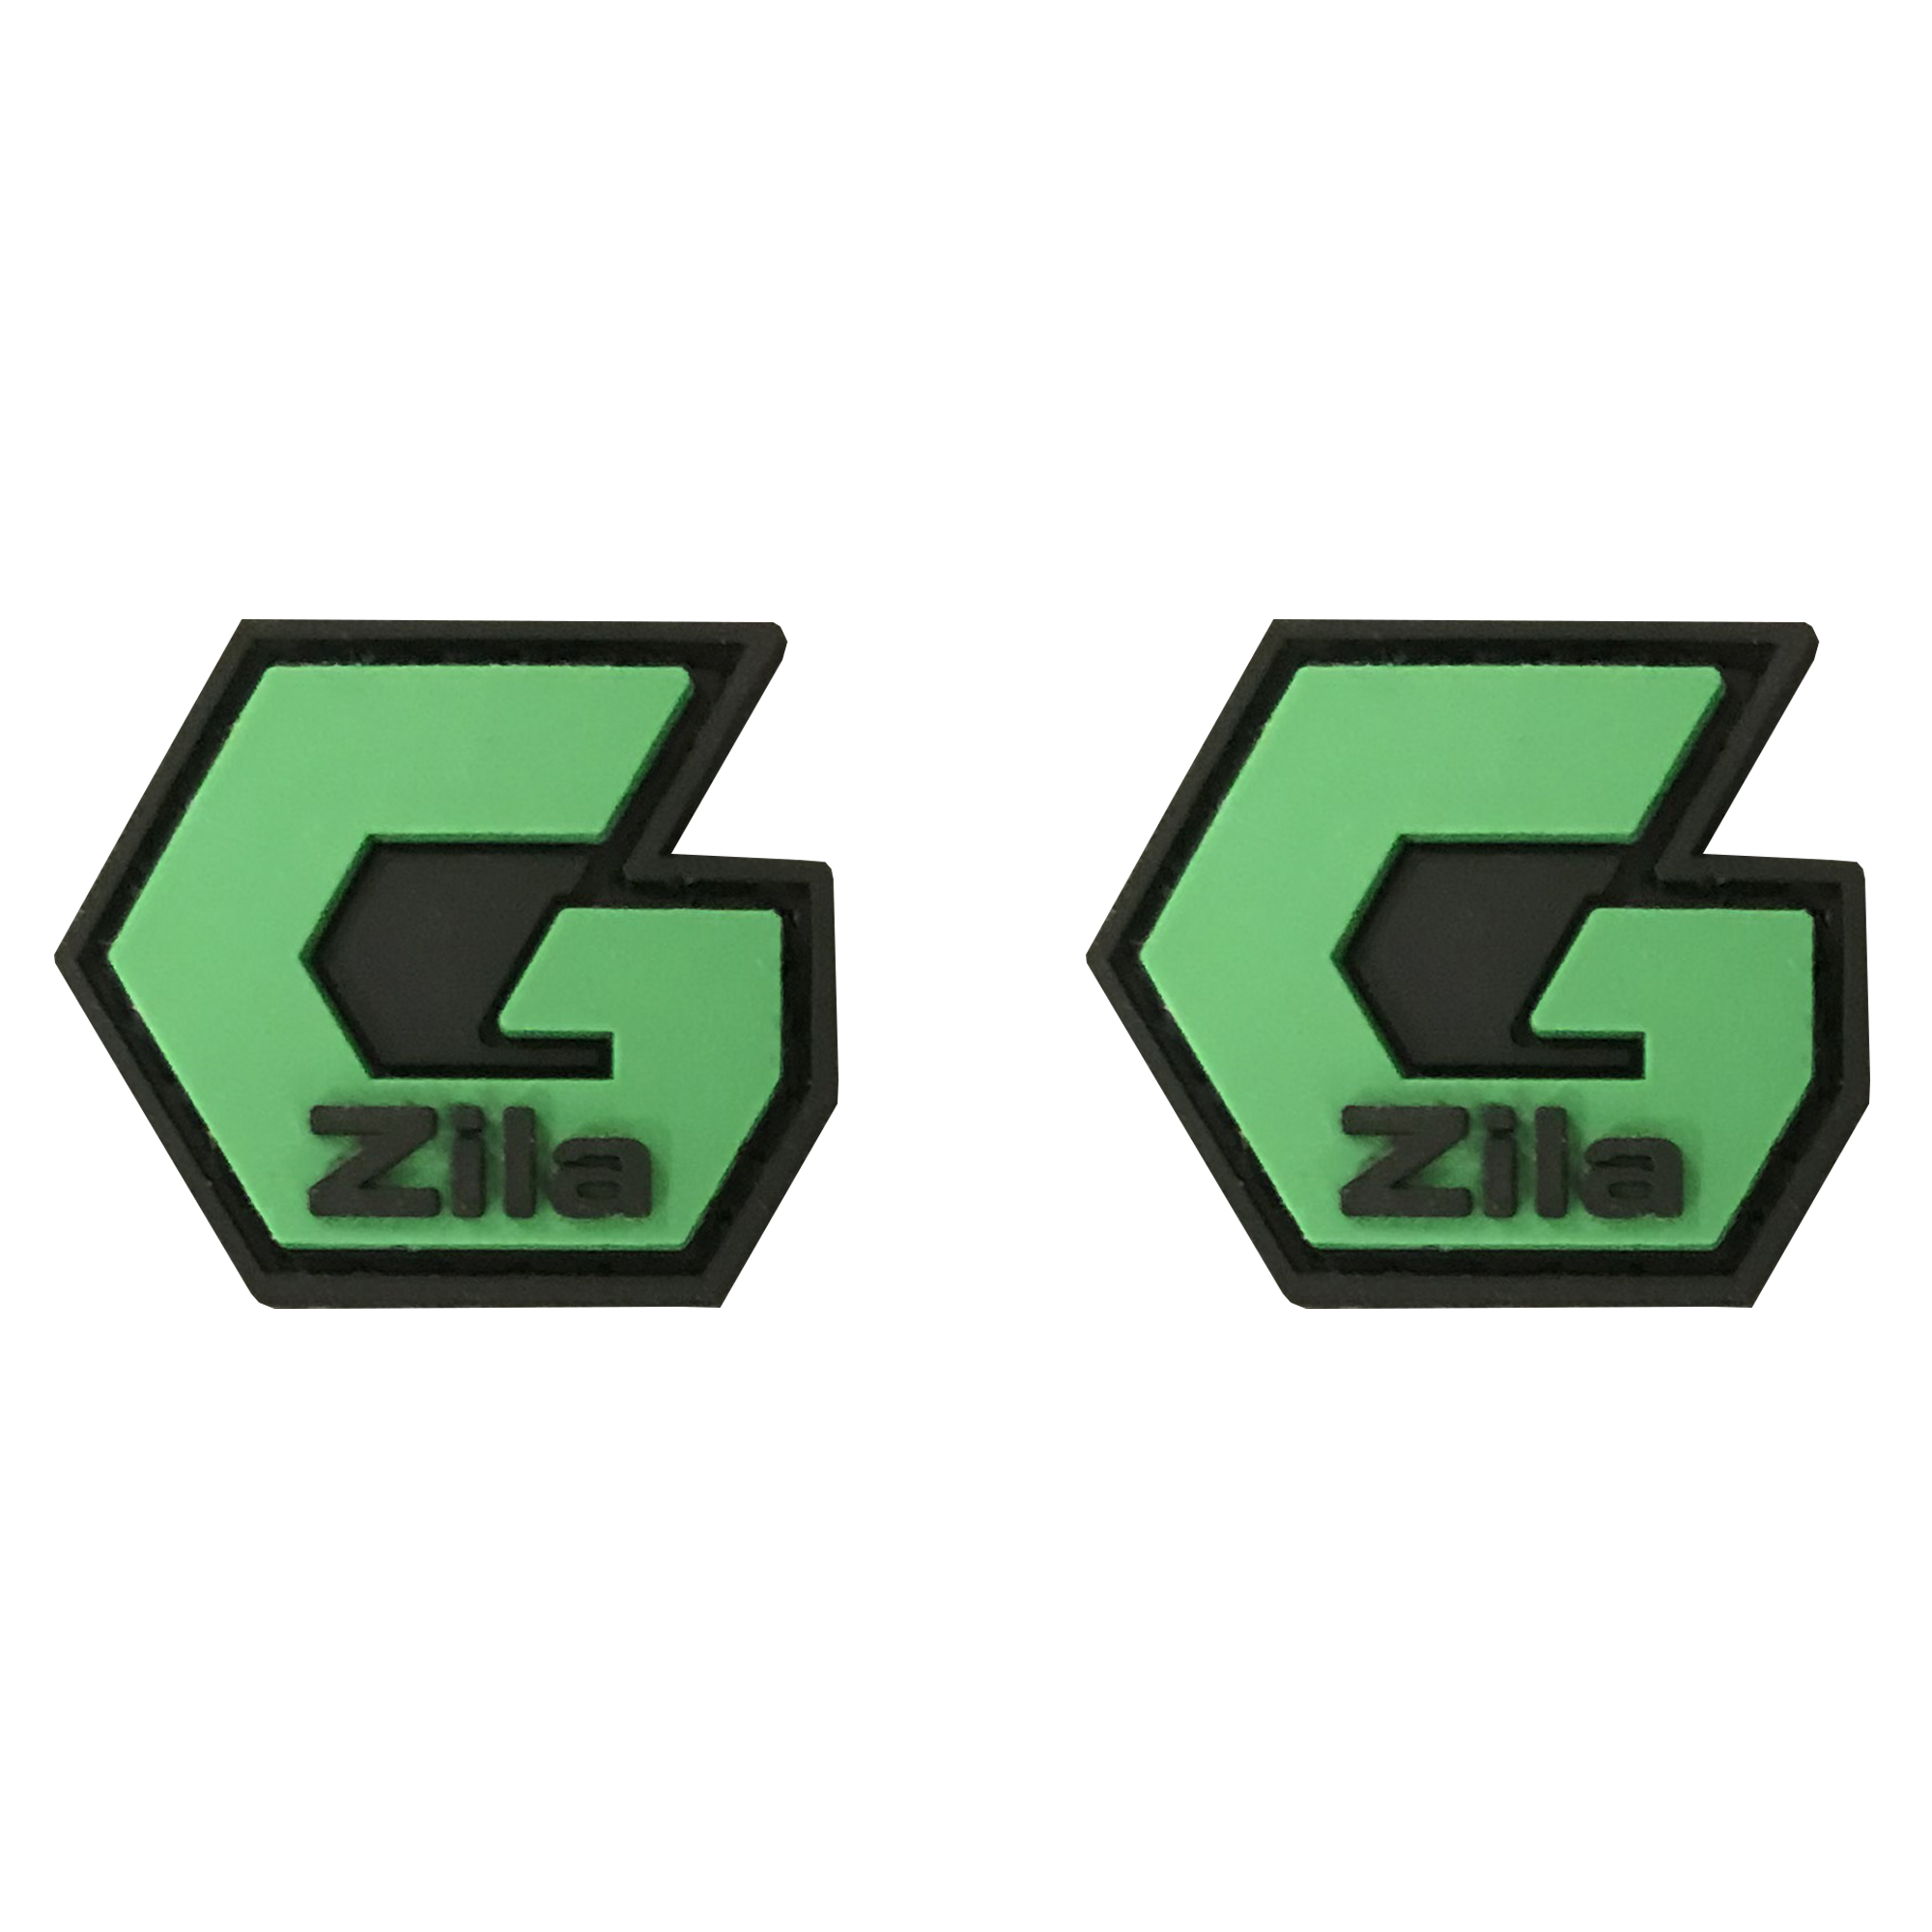 GZila Green Ranger Eyes Patches - GZila Designs